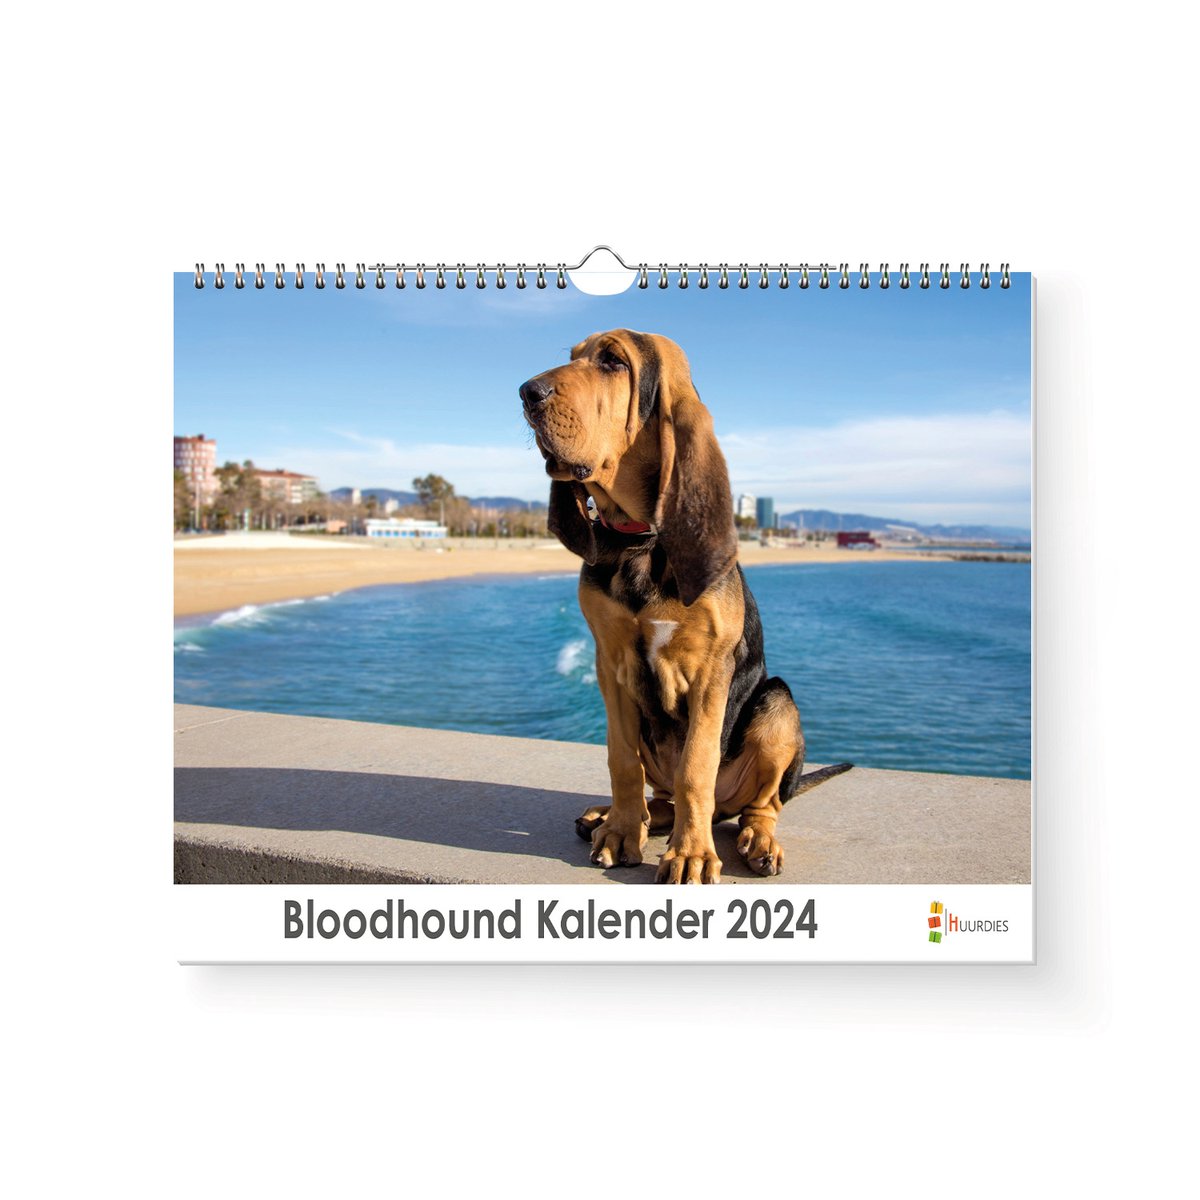 Kalender 2024 - Bloodhound - 35x24cm - 300gms - Spiraalgebonden - Inclusief ophanghaak